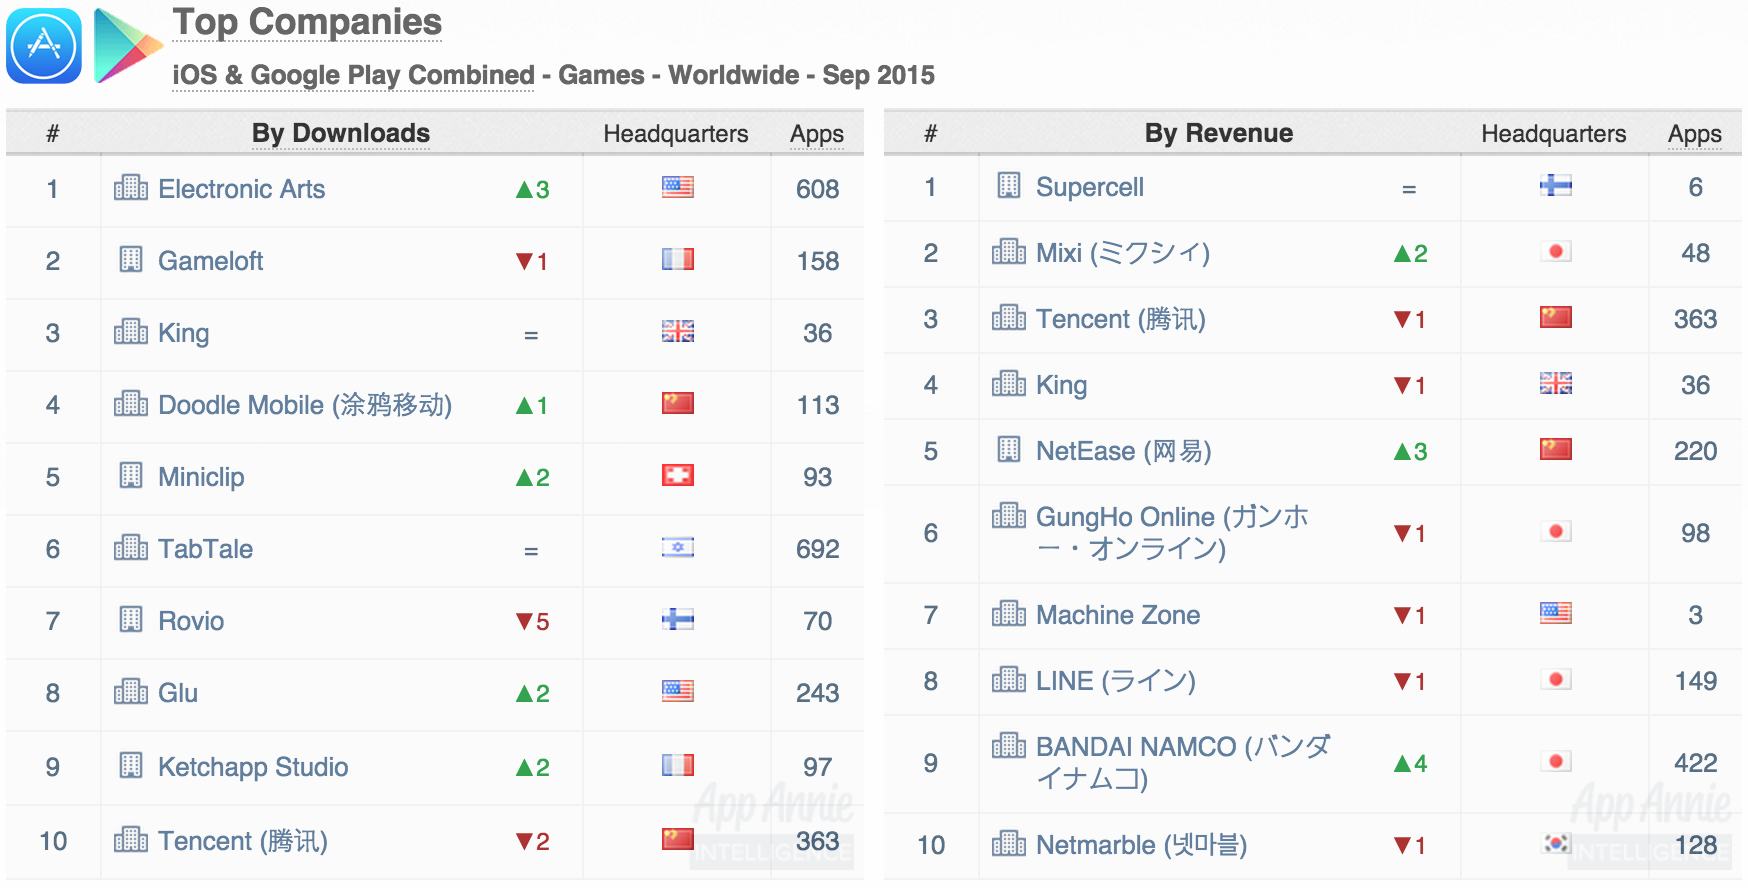 Top Companies Combined Games Worldwide September 2015